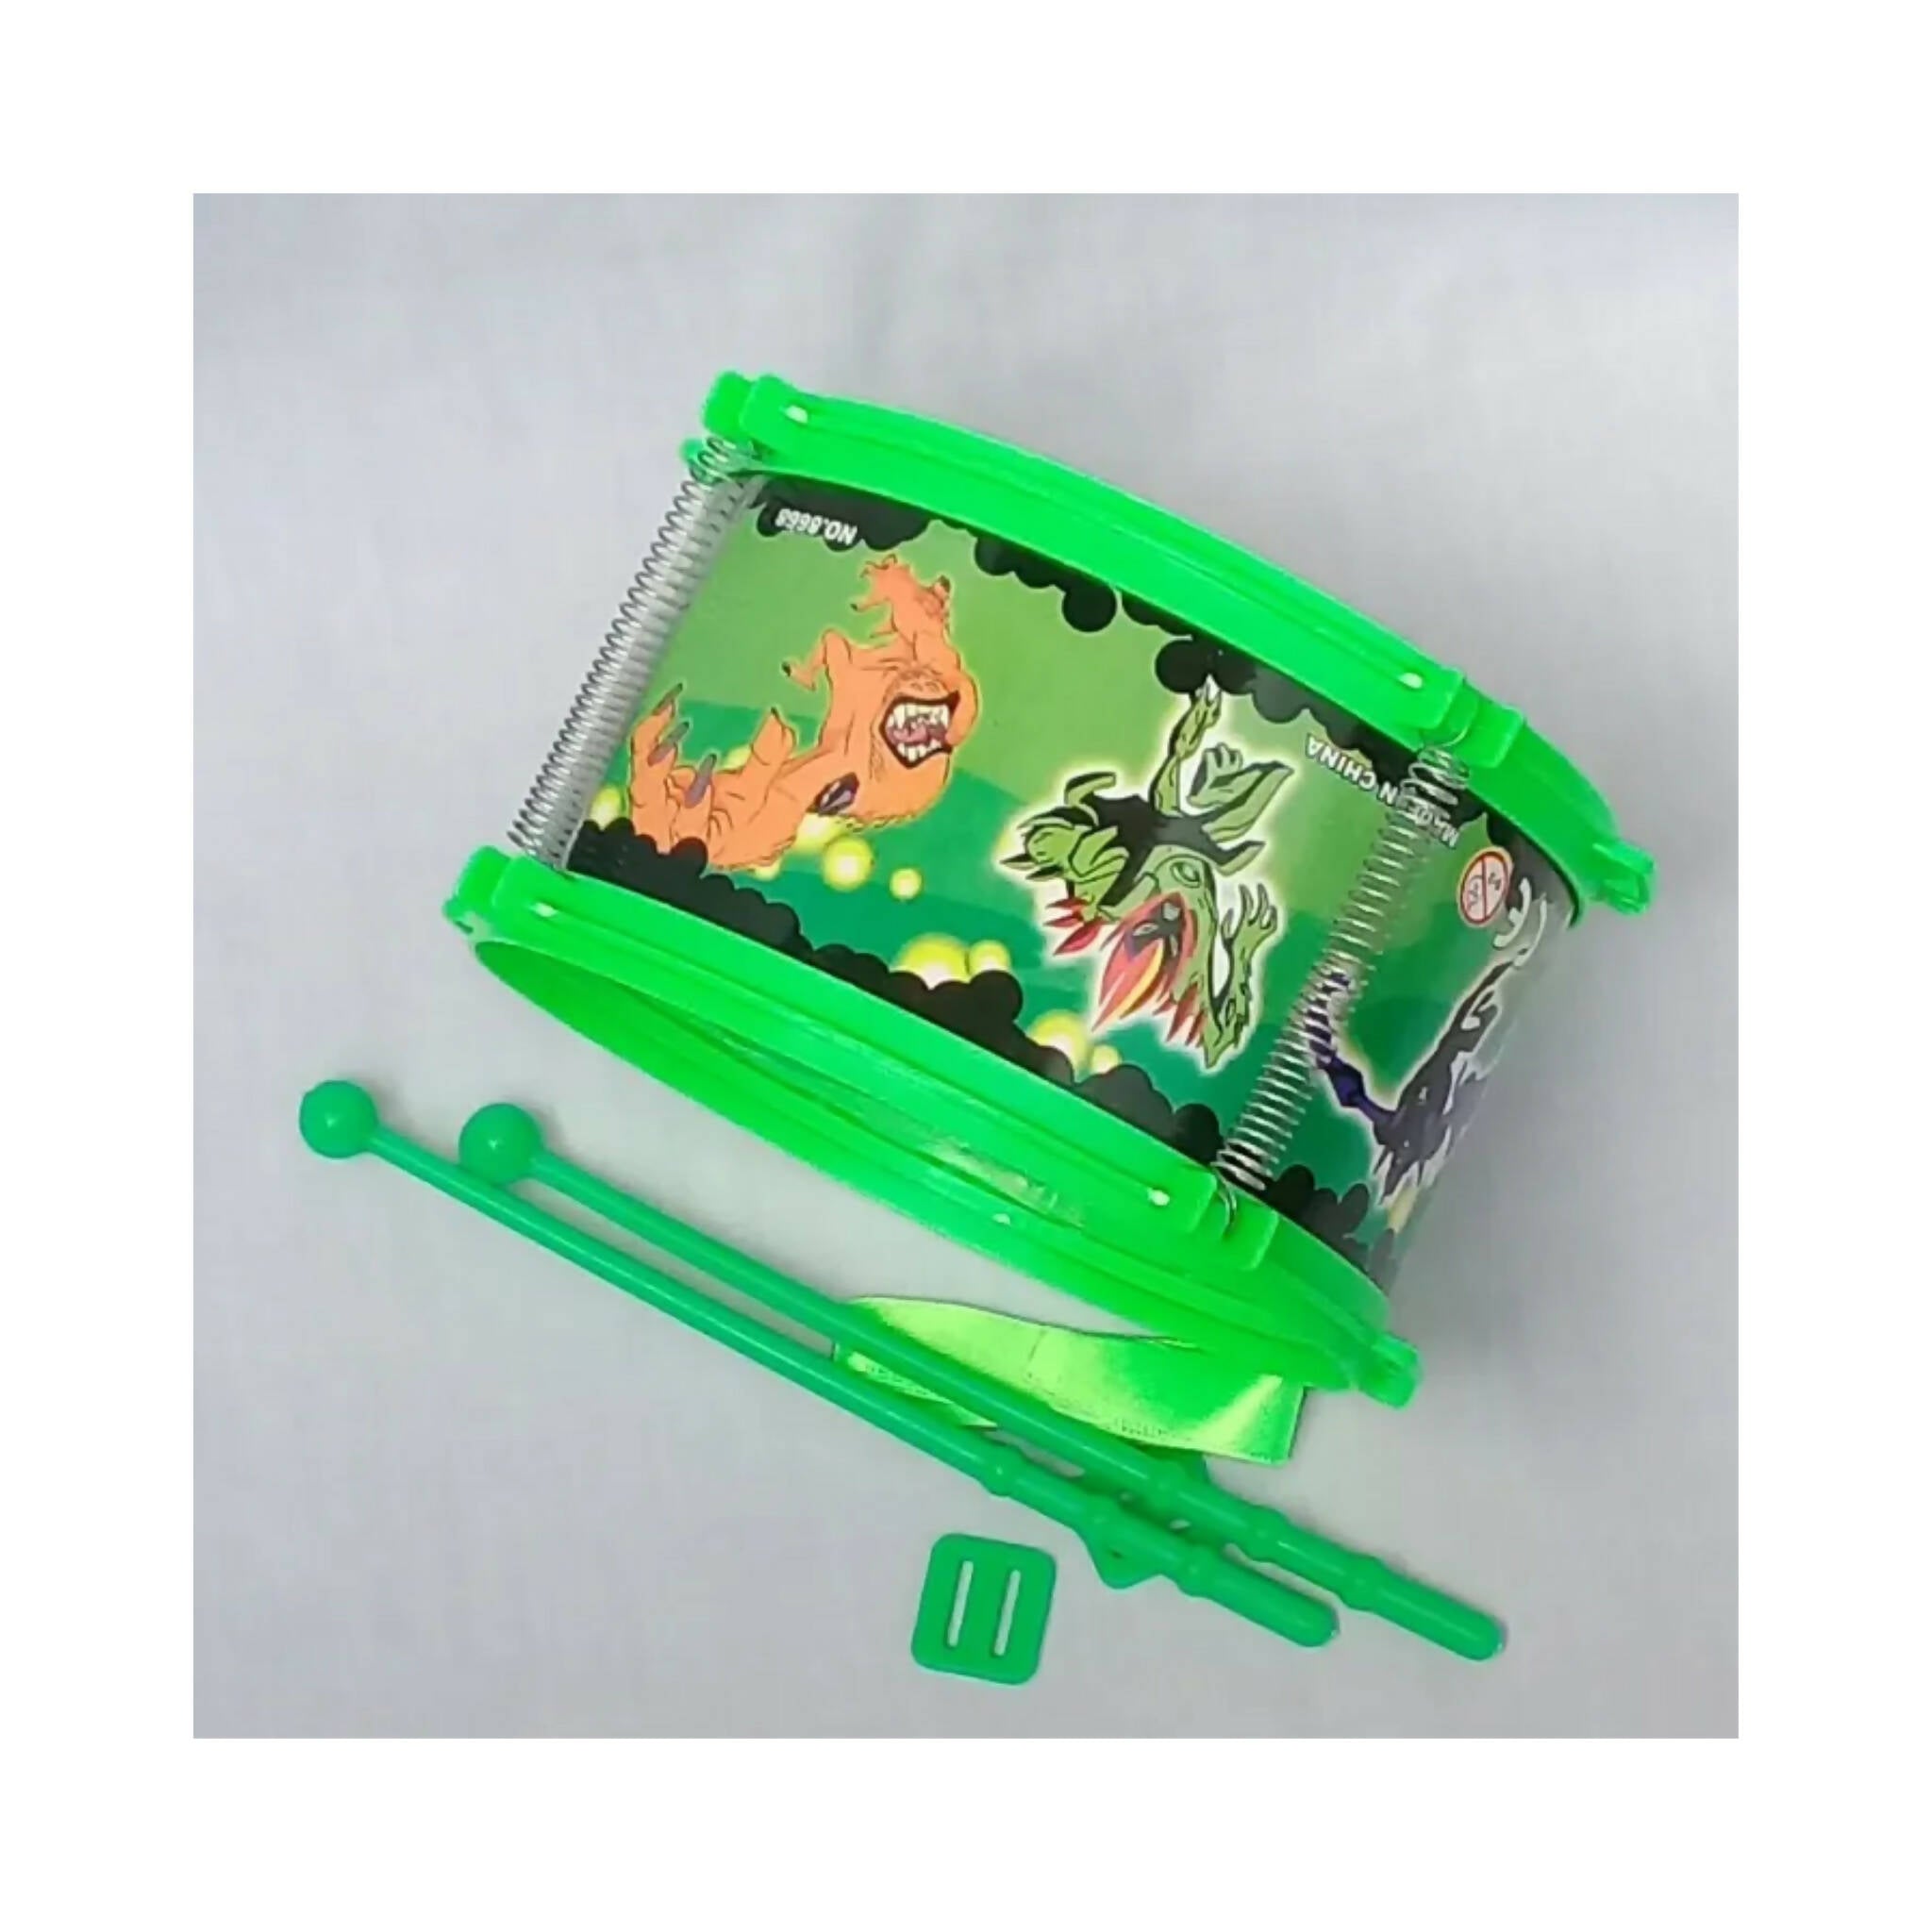 Drum Set, Ben 10 Mini - Music Toy, for Kids